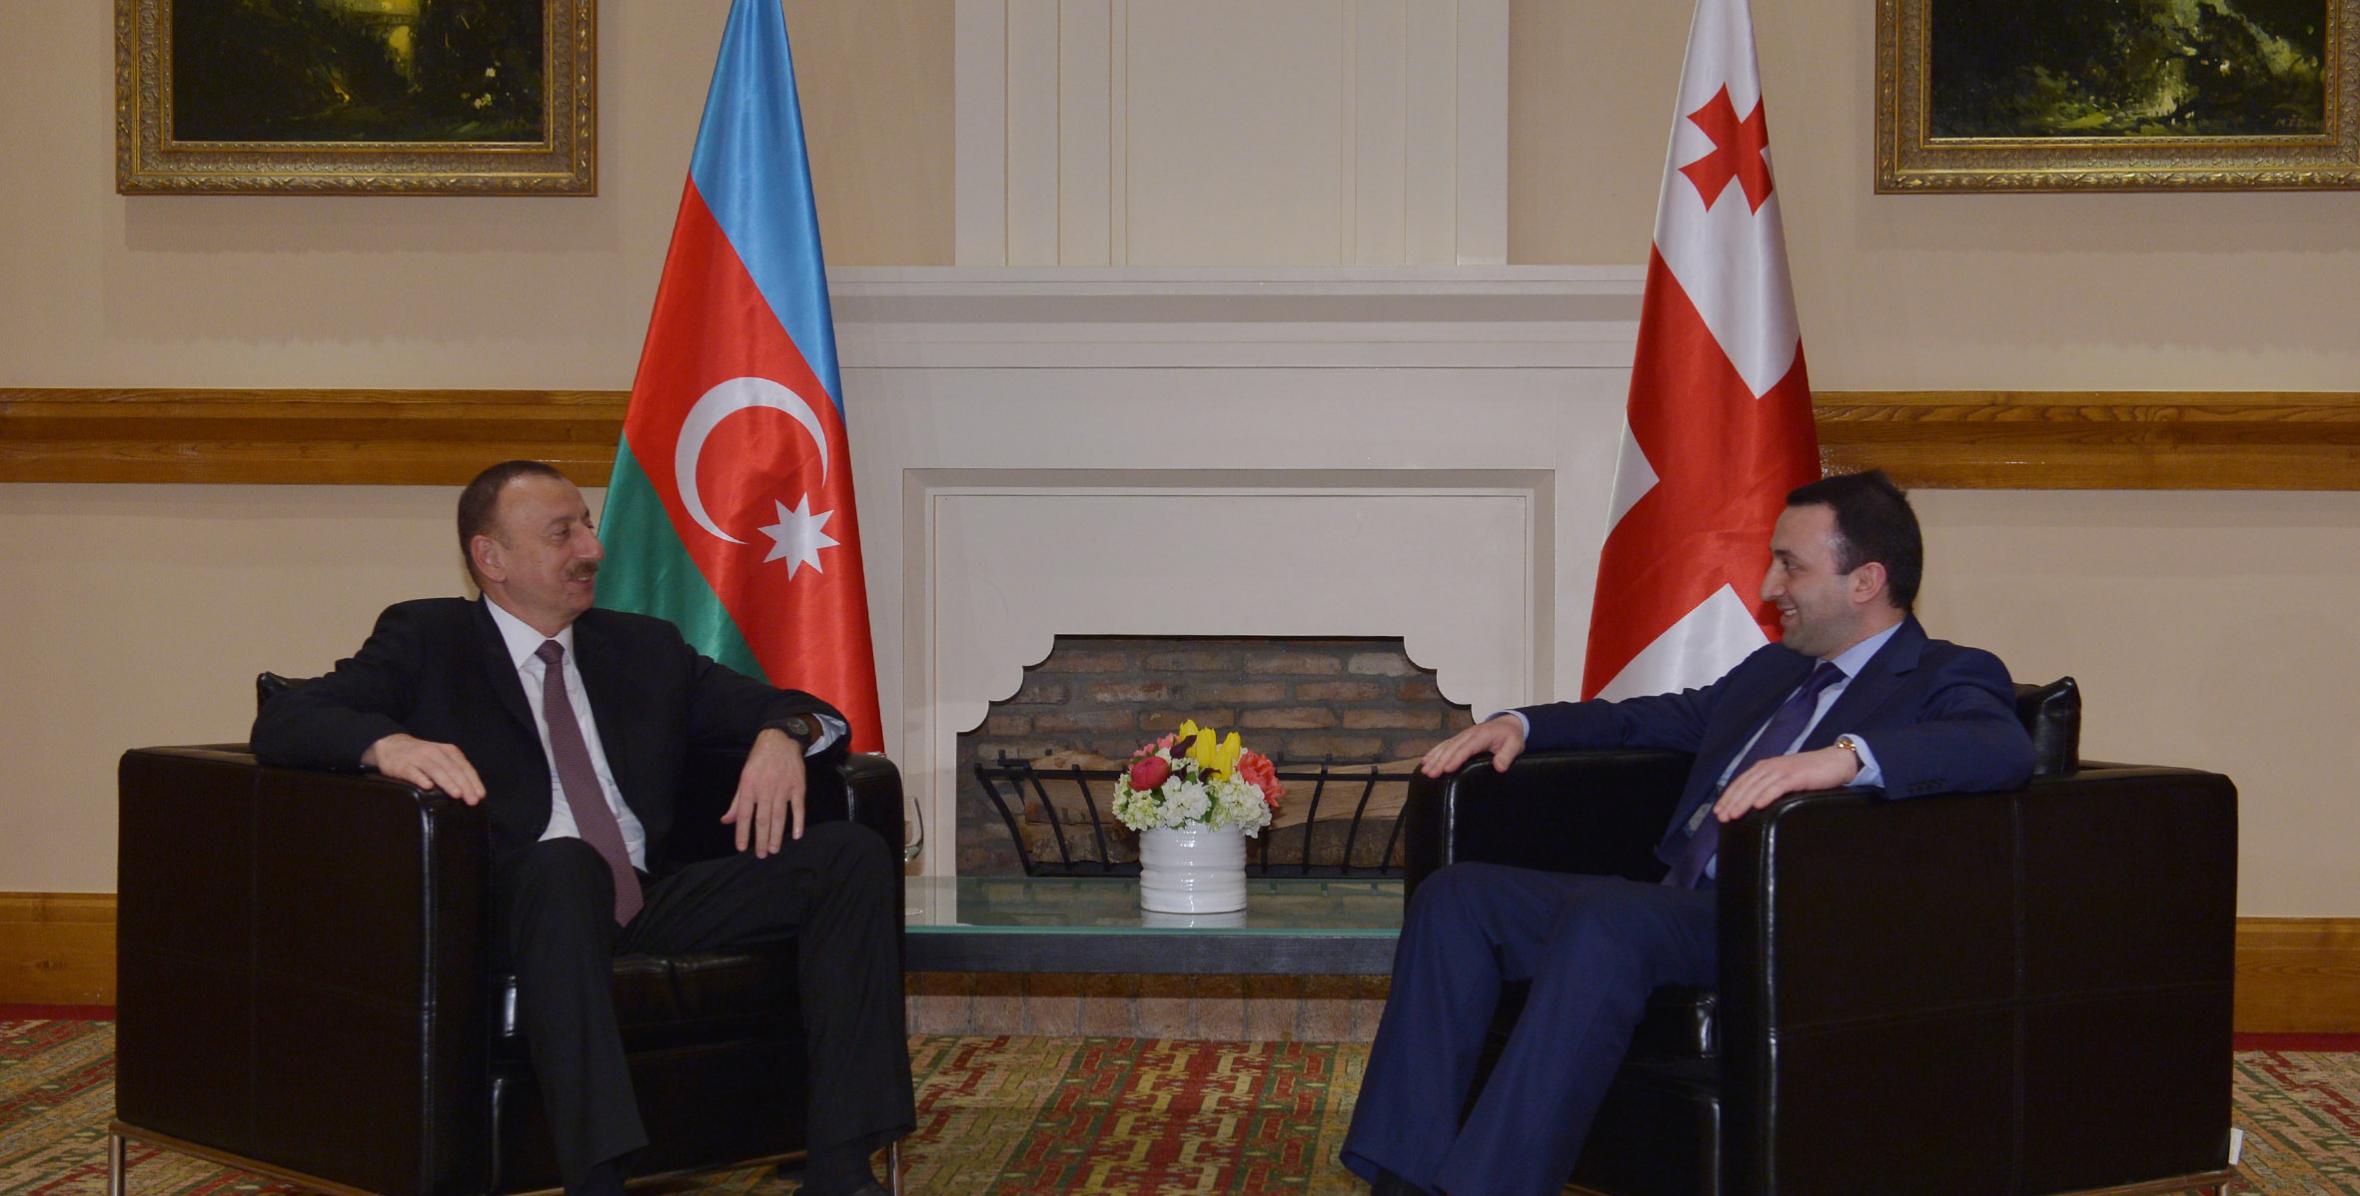 Ilham Aliyev met with Prime Minister of Georgia Irakli Garibashvili in Tbilisi